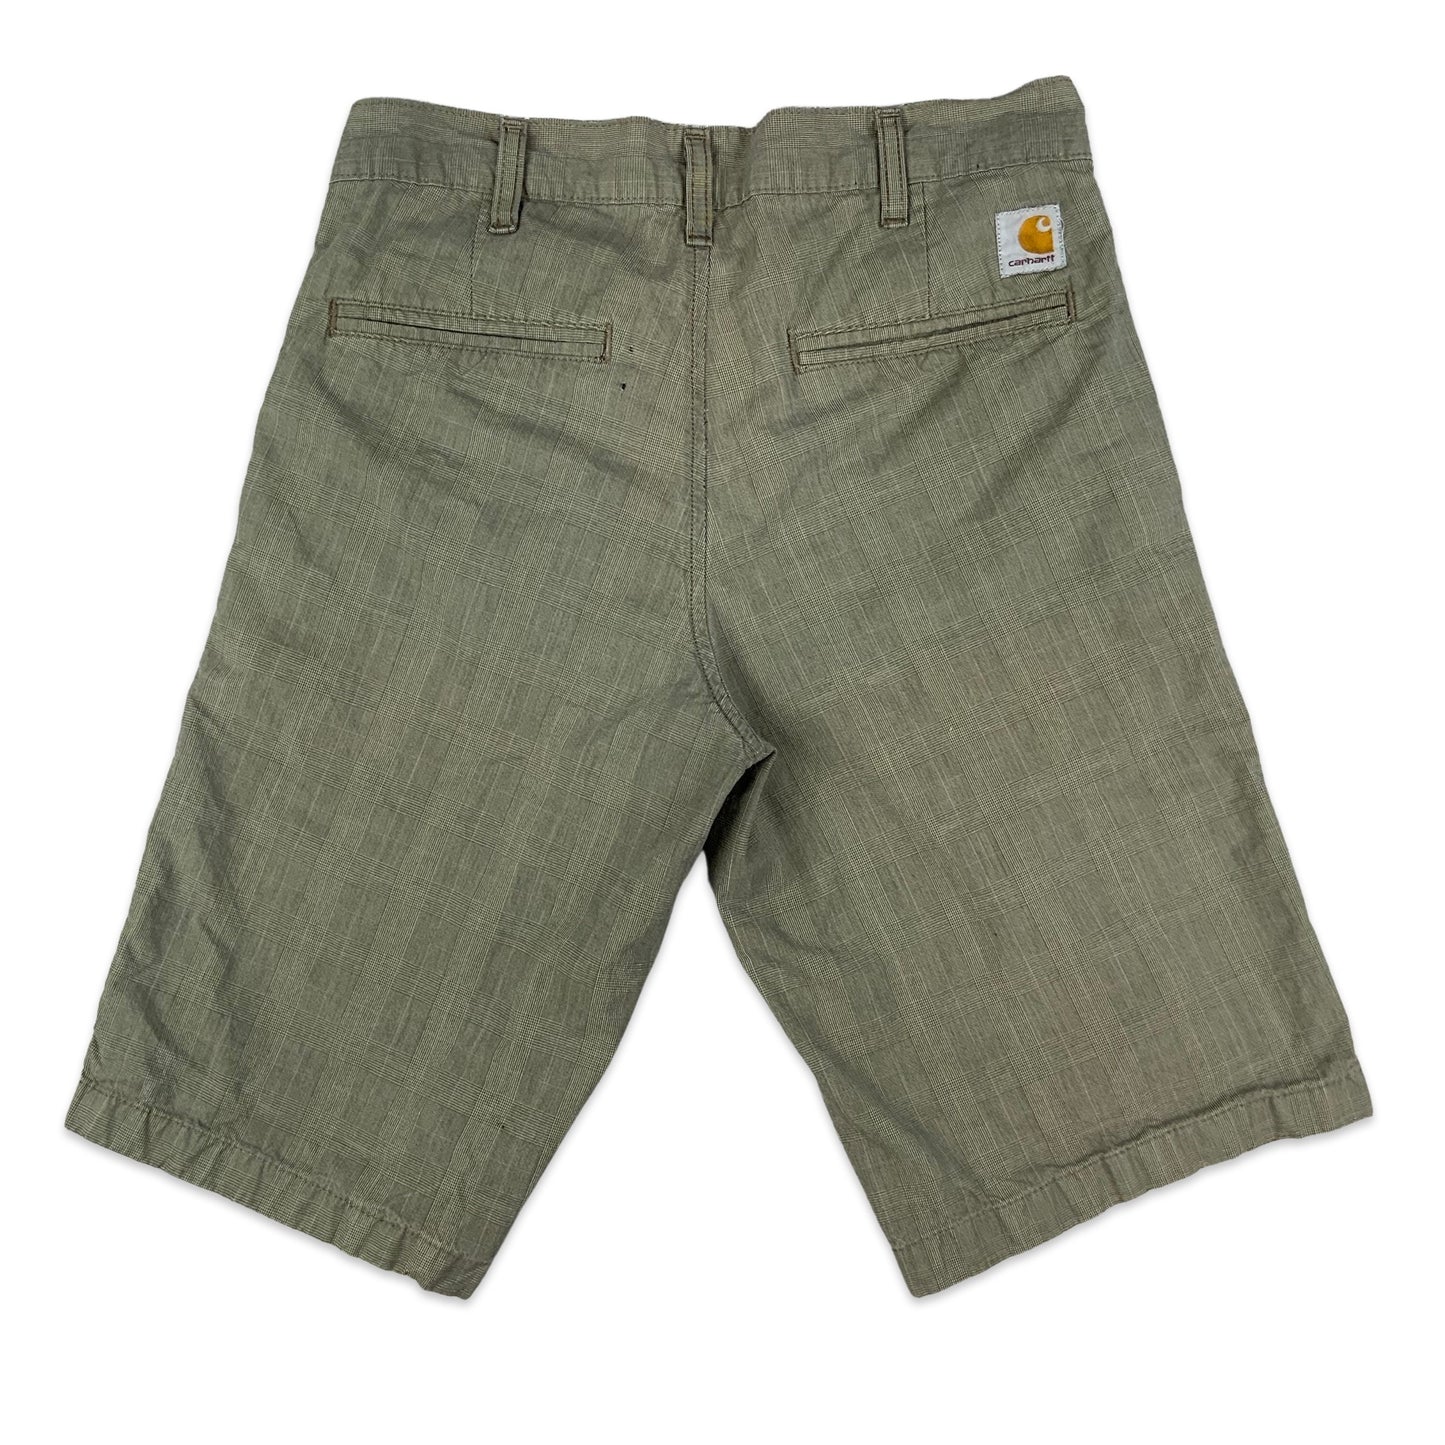 Vintage Khaki Plaid Carhartt Shorts XS S